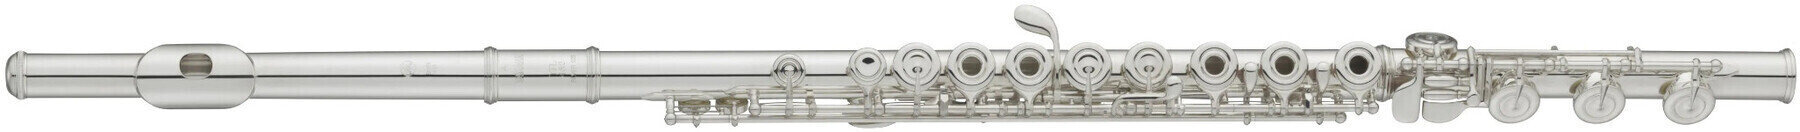 Concert flute Yamaha YFL 422 Concert flute